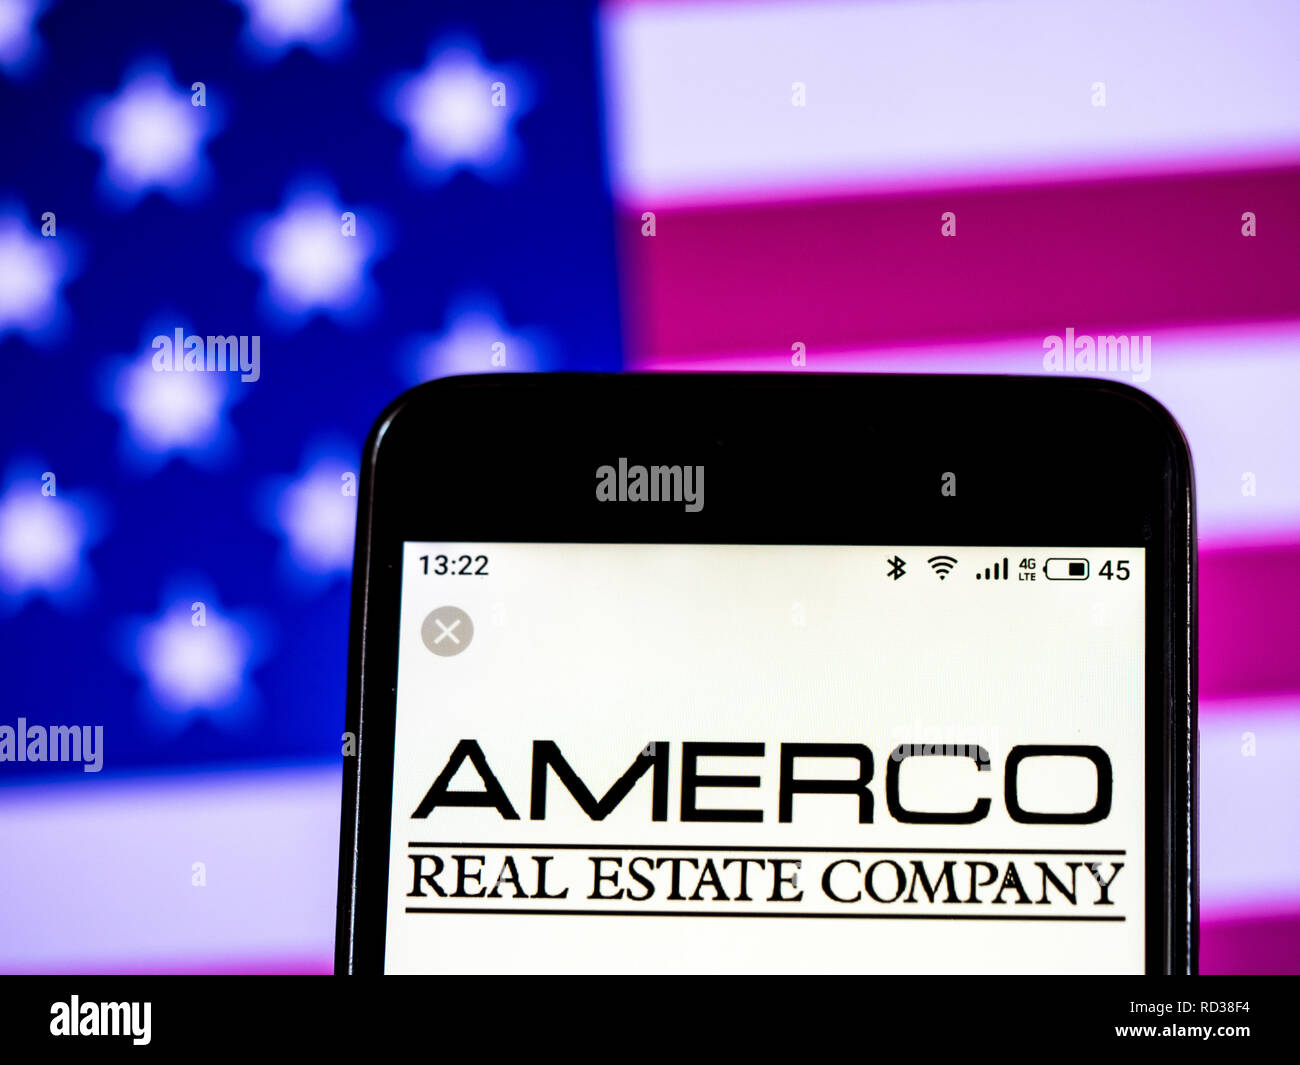 AMERCO Insurance company logo seen displayed on smart phone Stock Photo